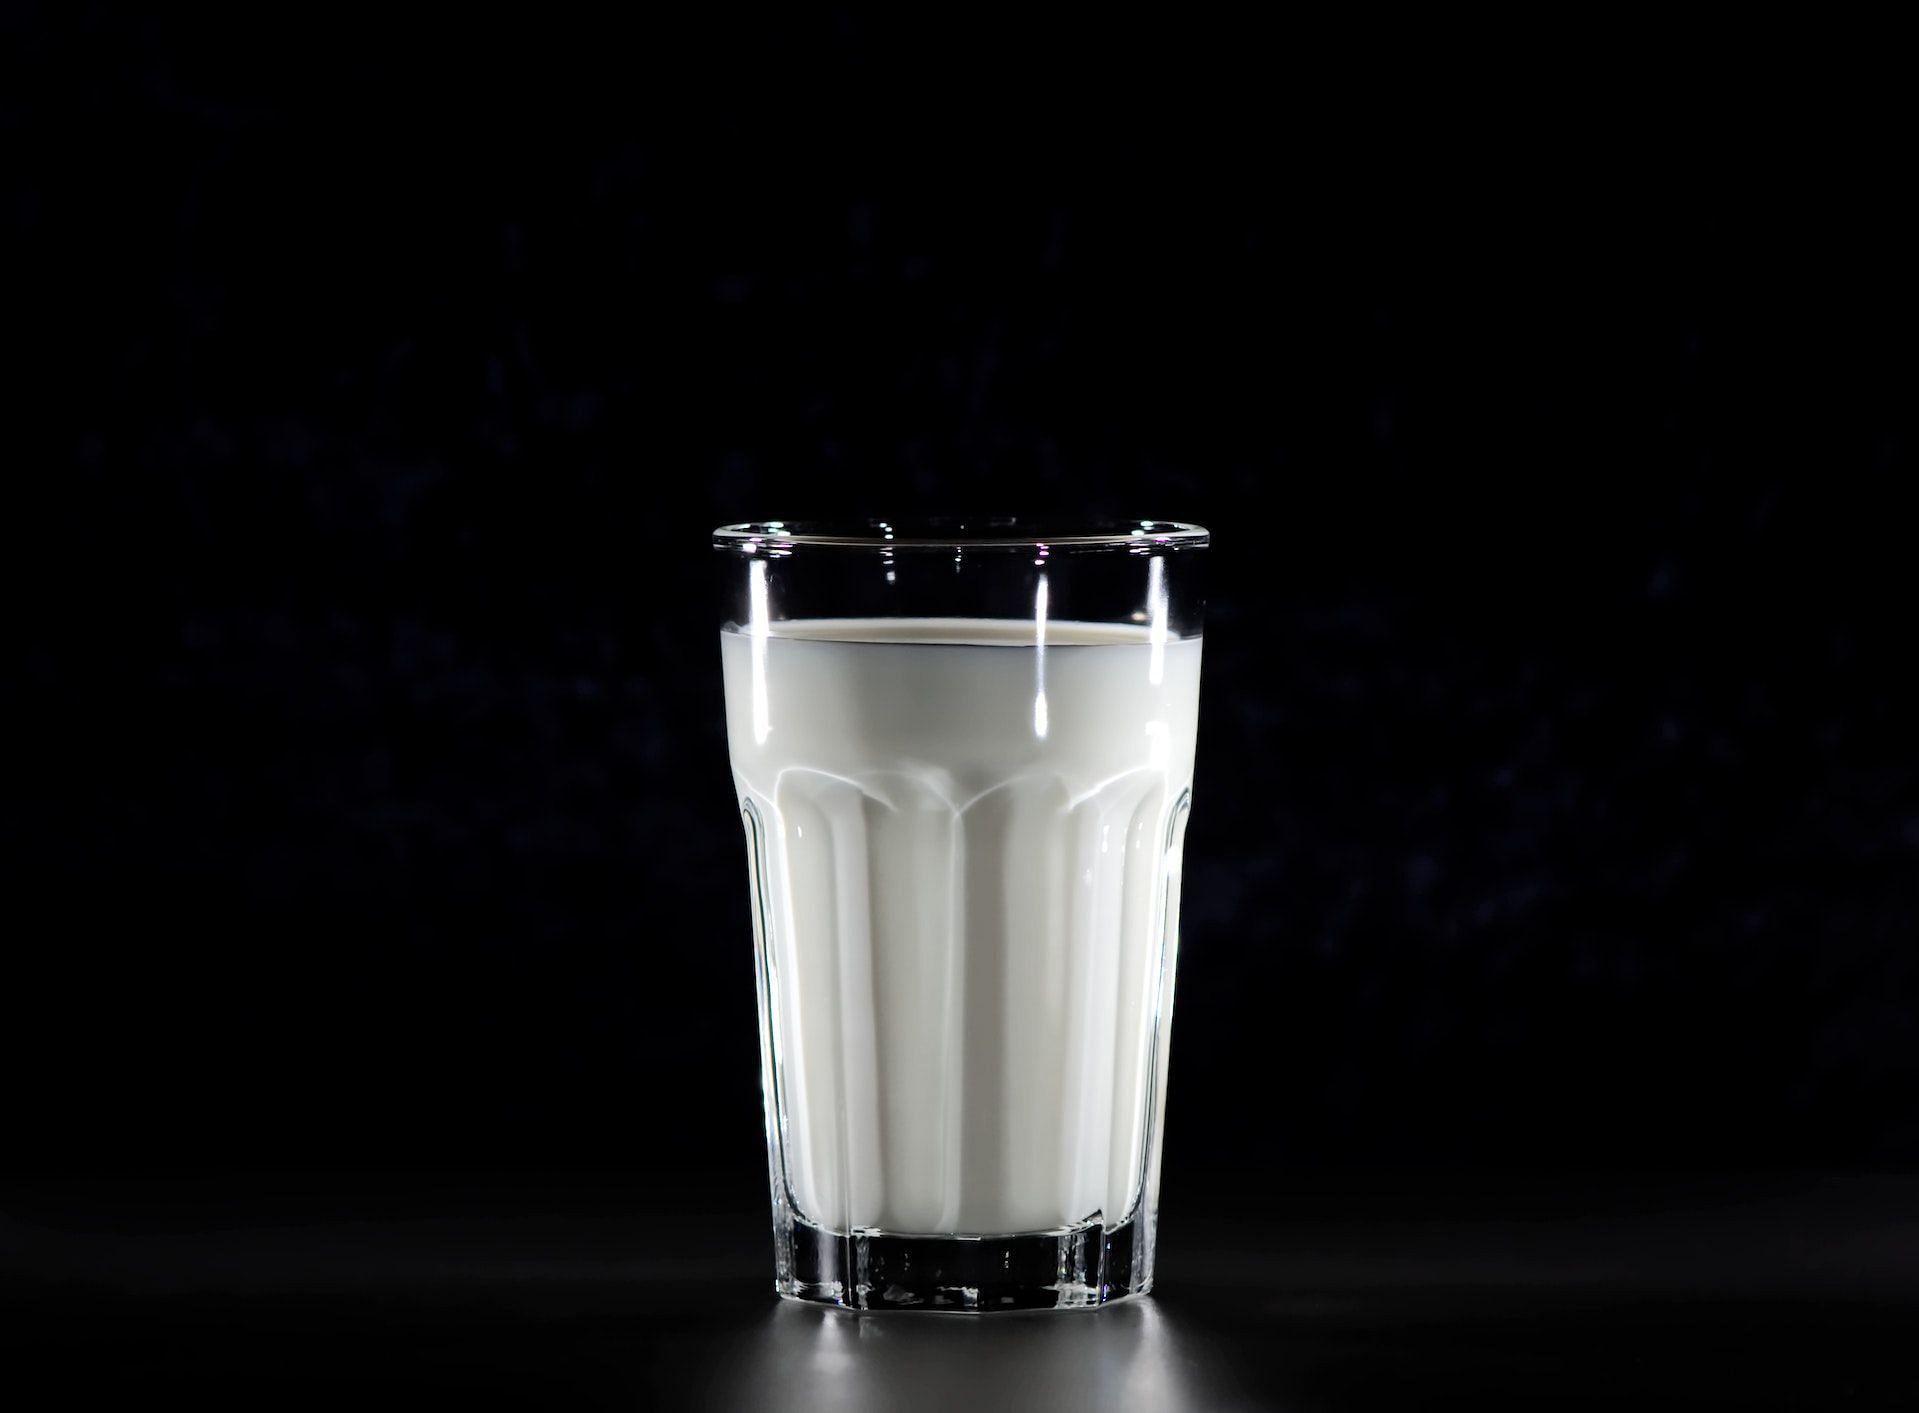 Kefir is a fermented milk product. (Photo via Pexels/Alexas Fotos)